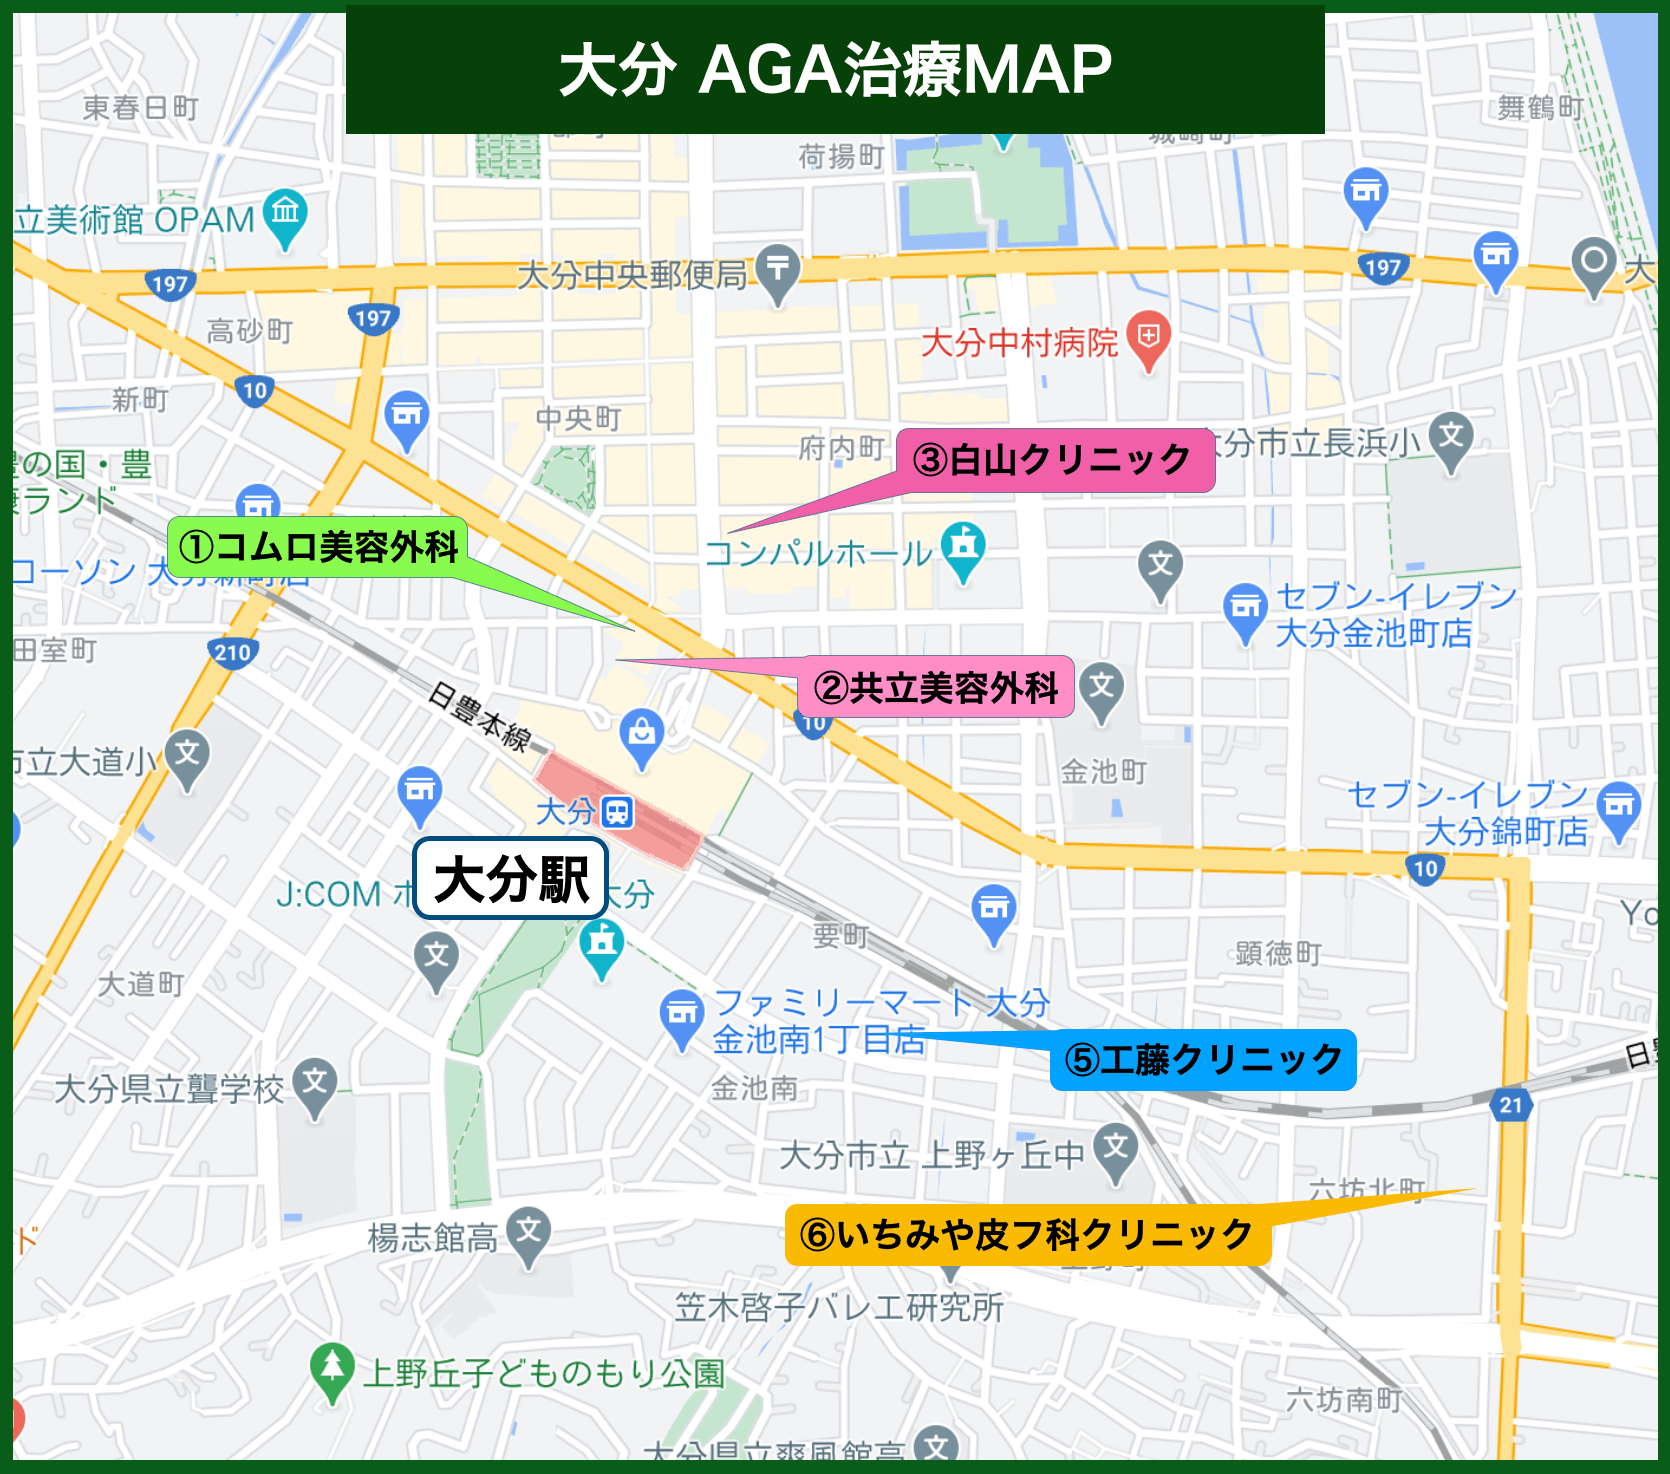 大分AGA治療MAP